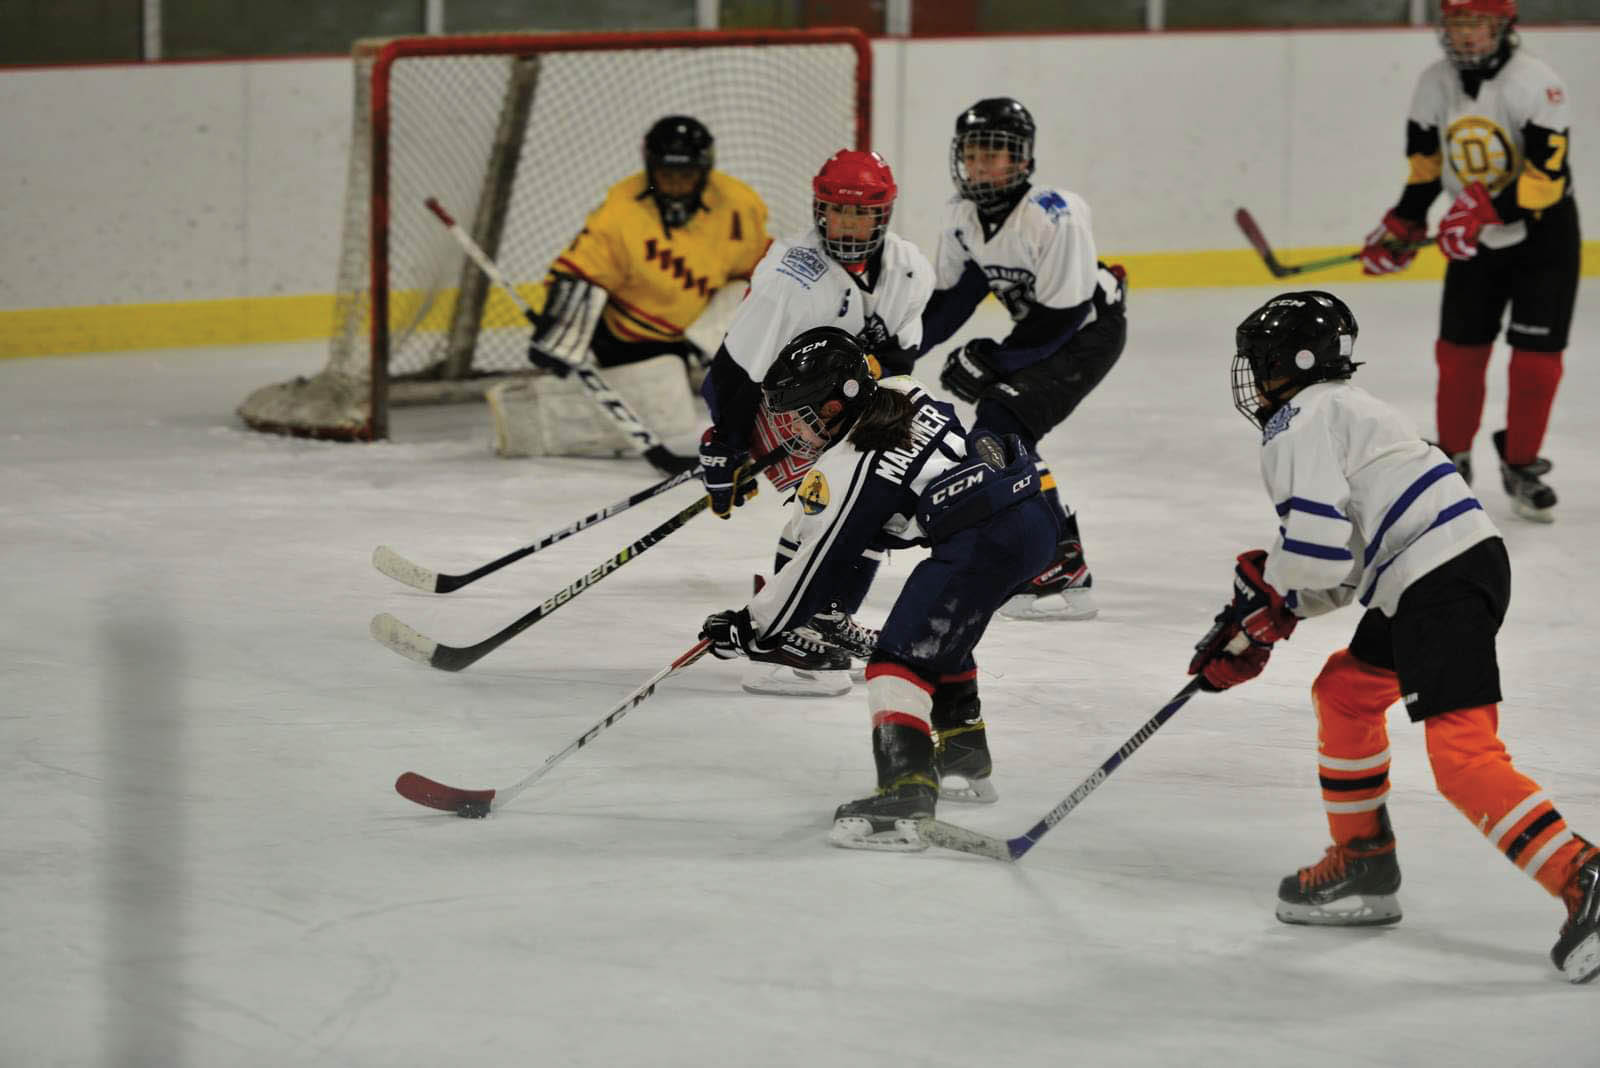 Youth playing hockey